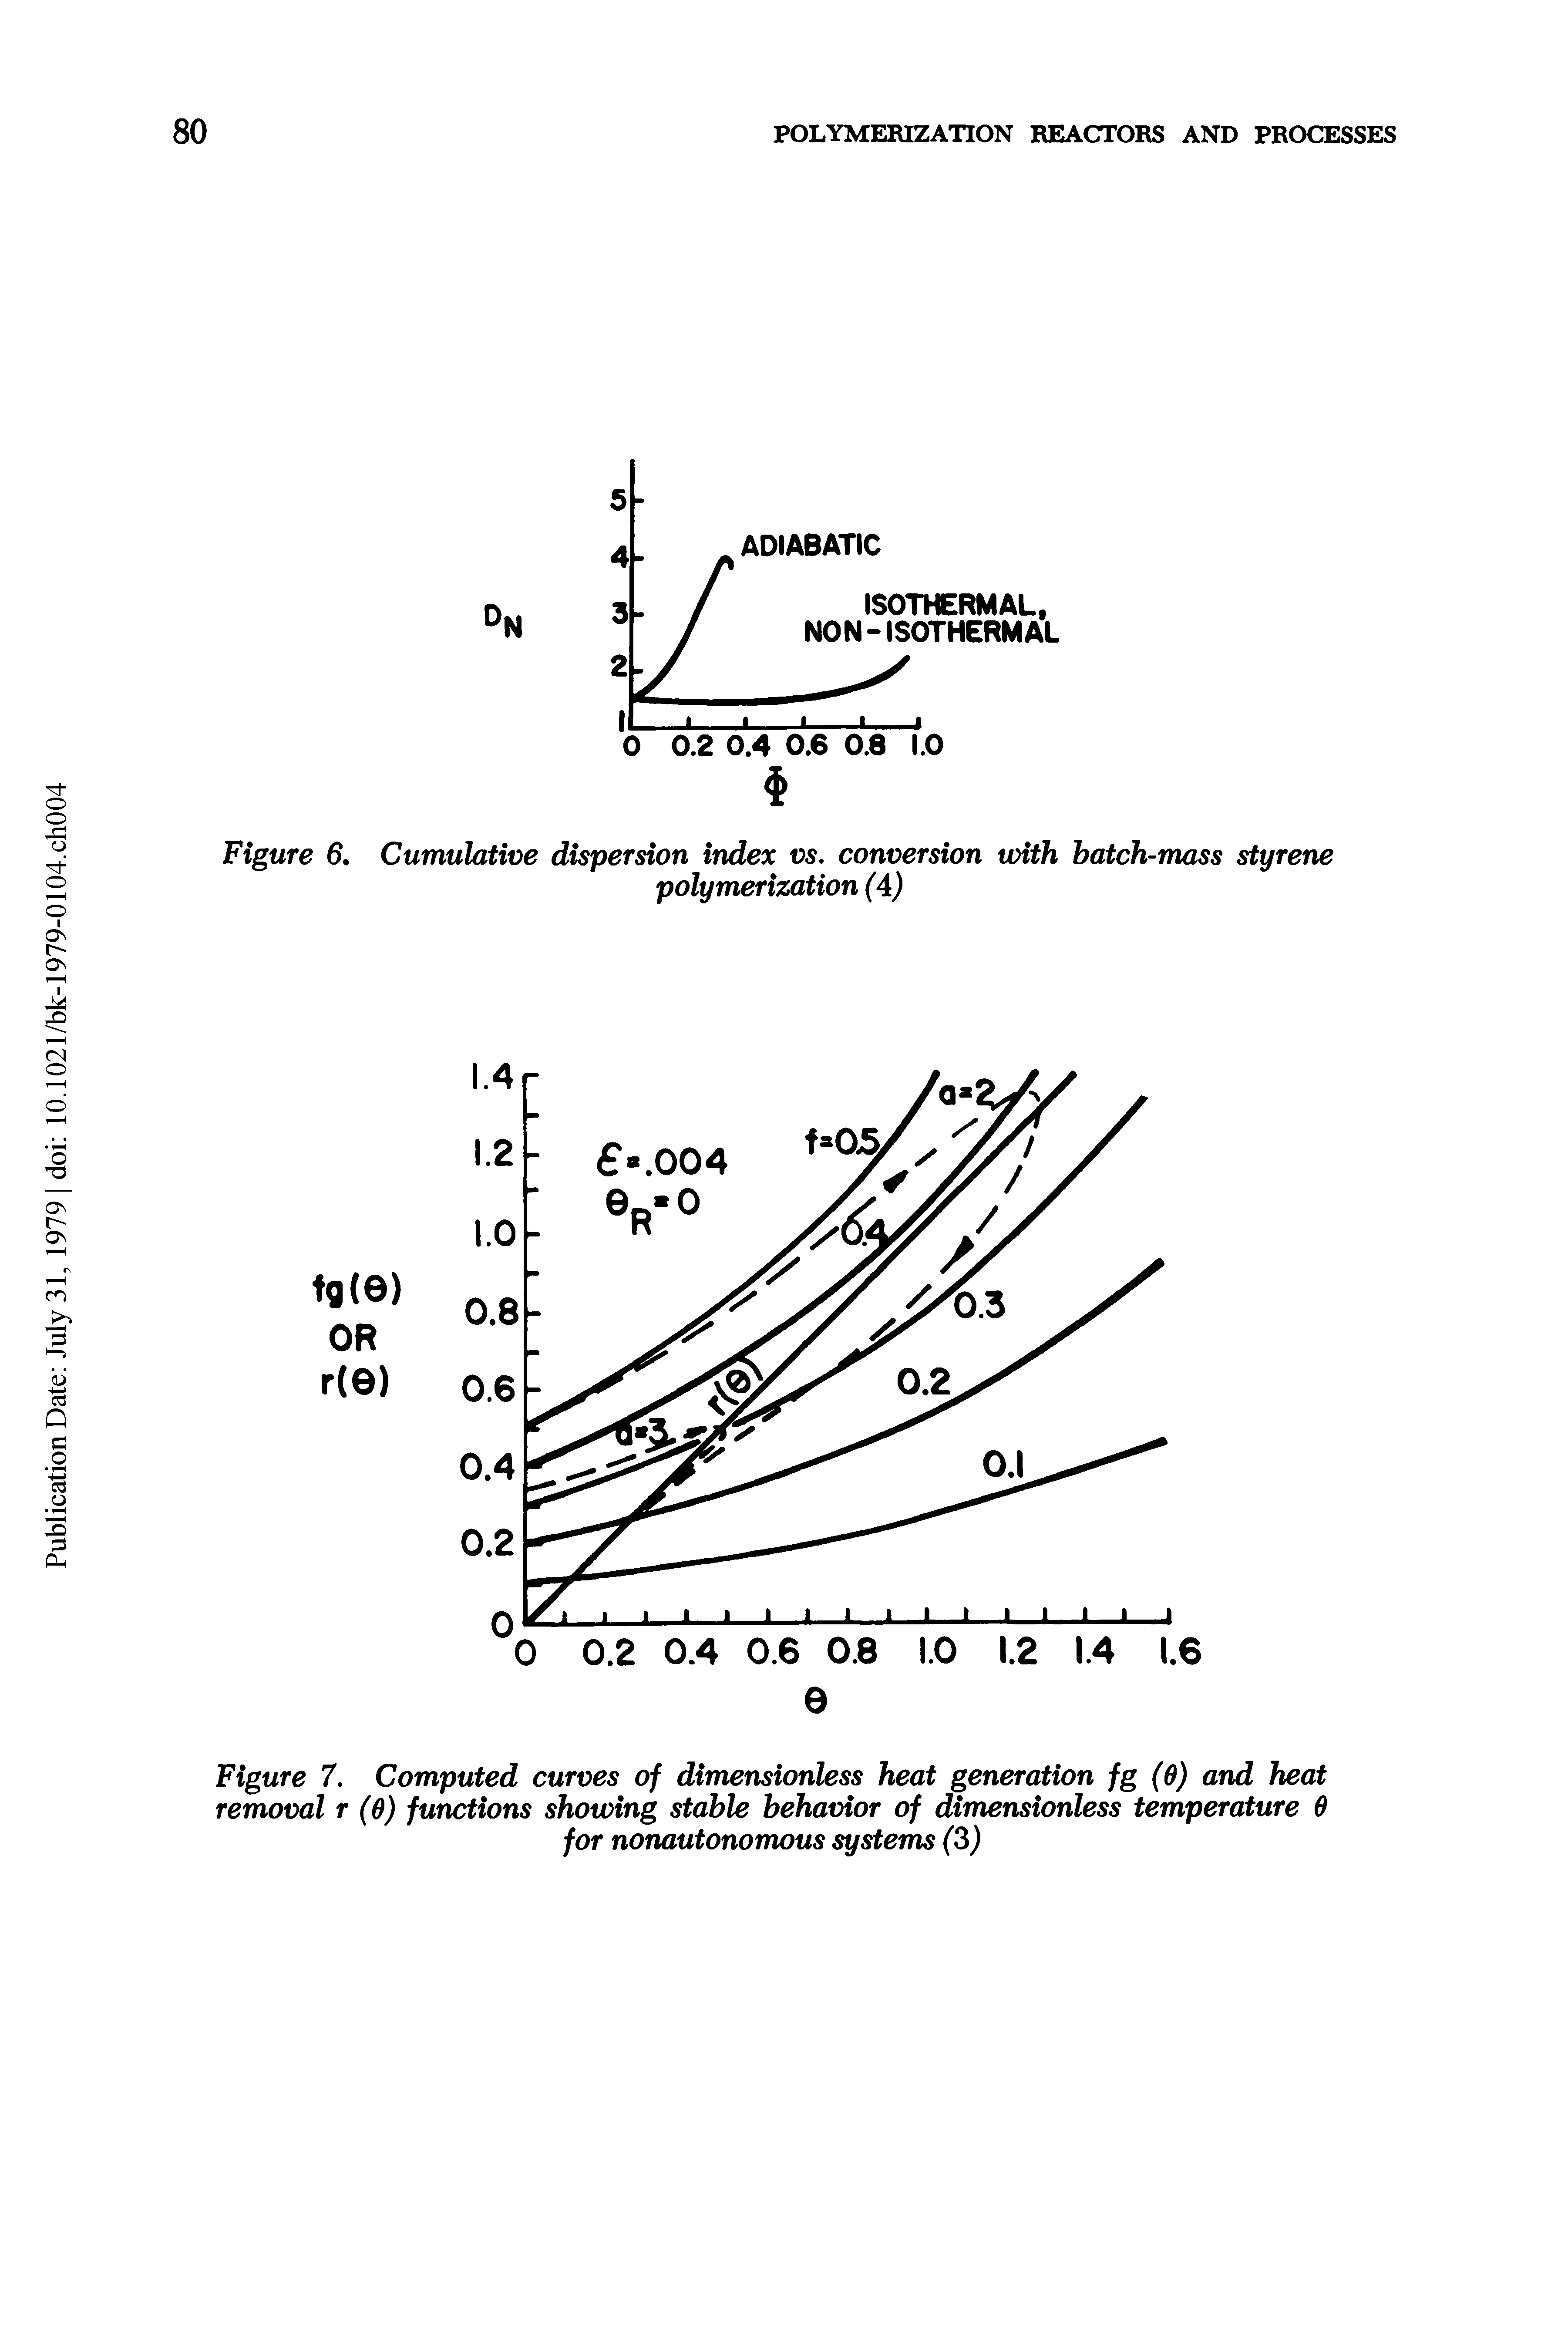 Figure 6. Cumulative dispersion index vs. conversion with batch-mass styrene...